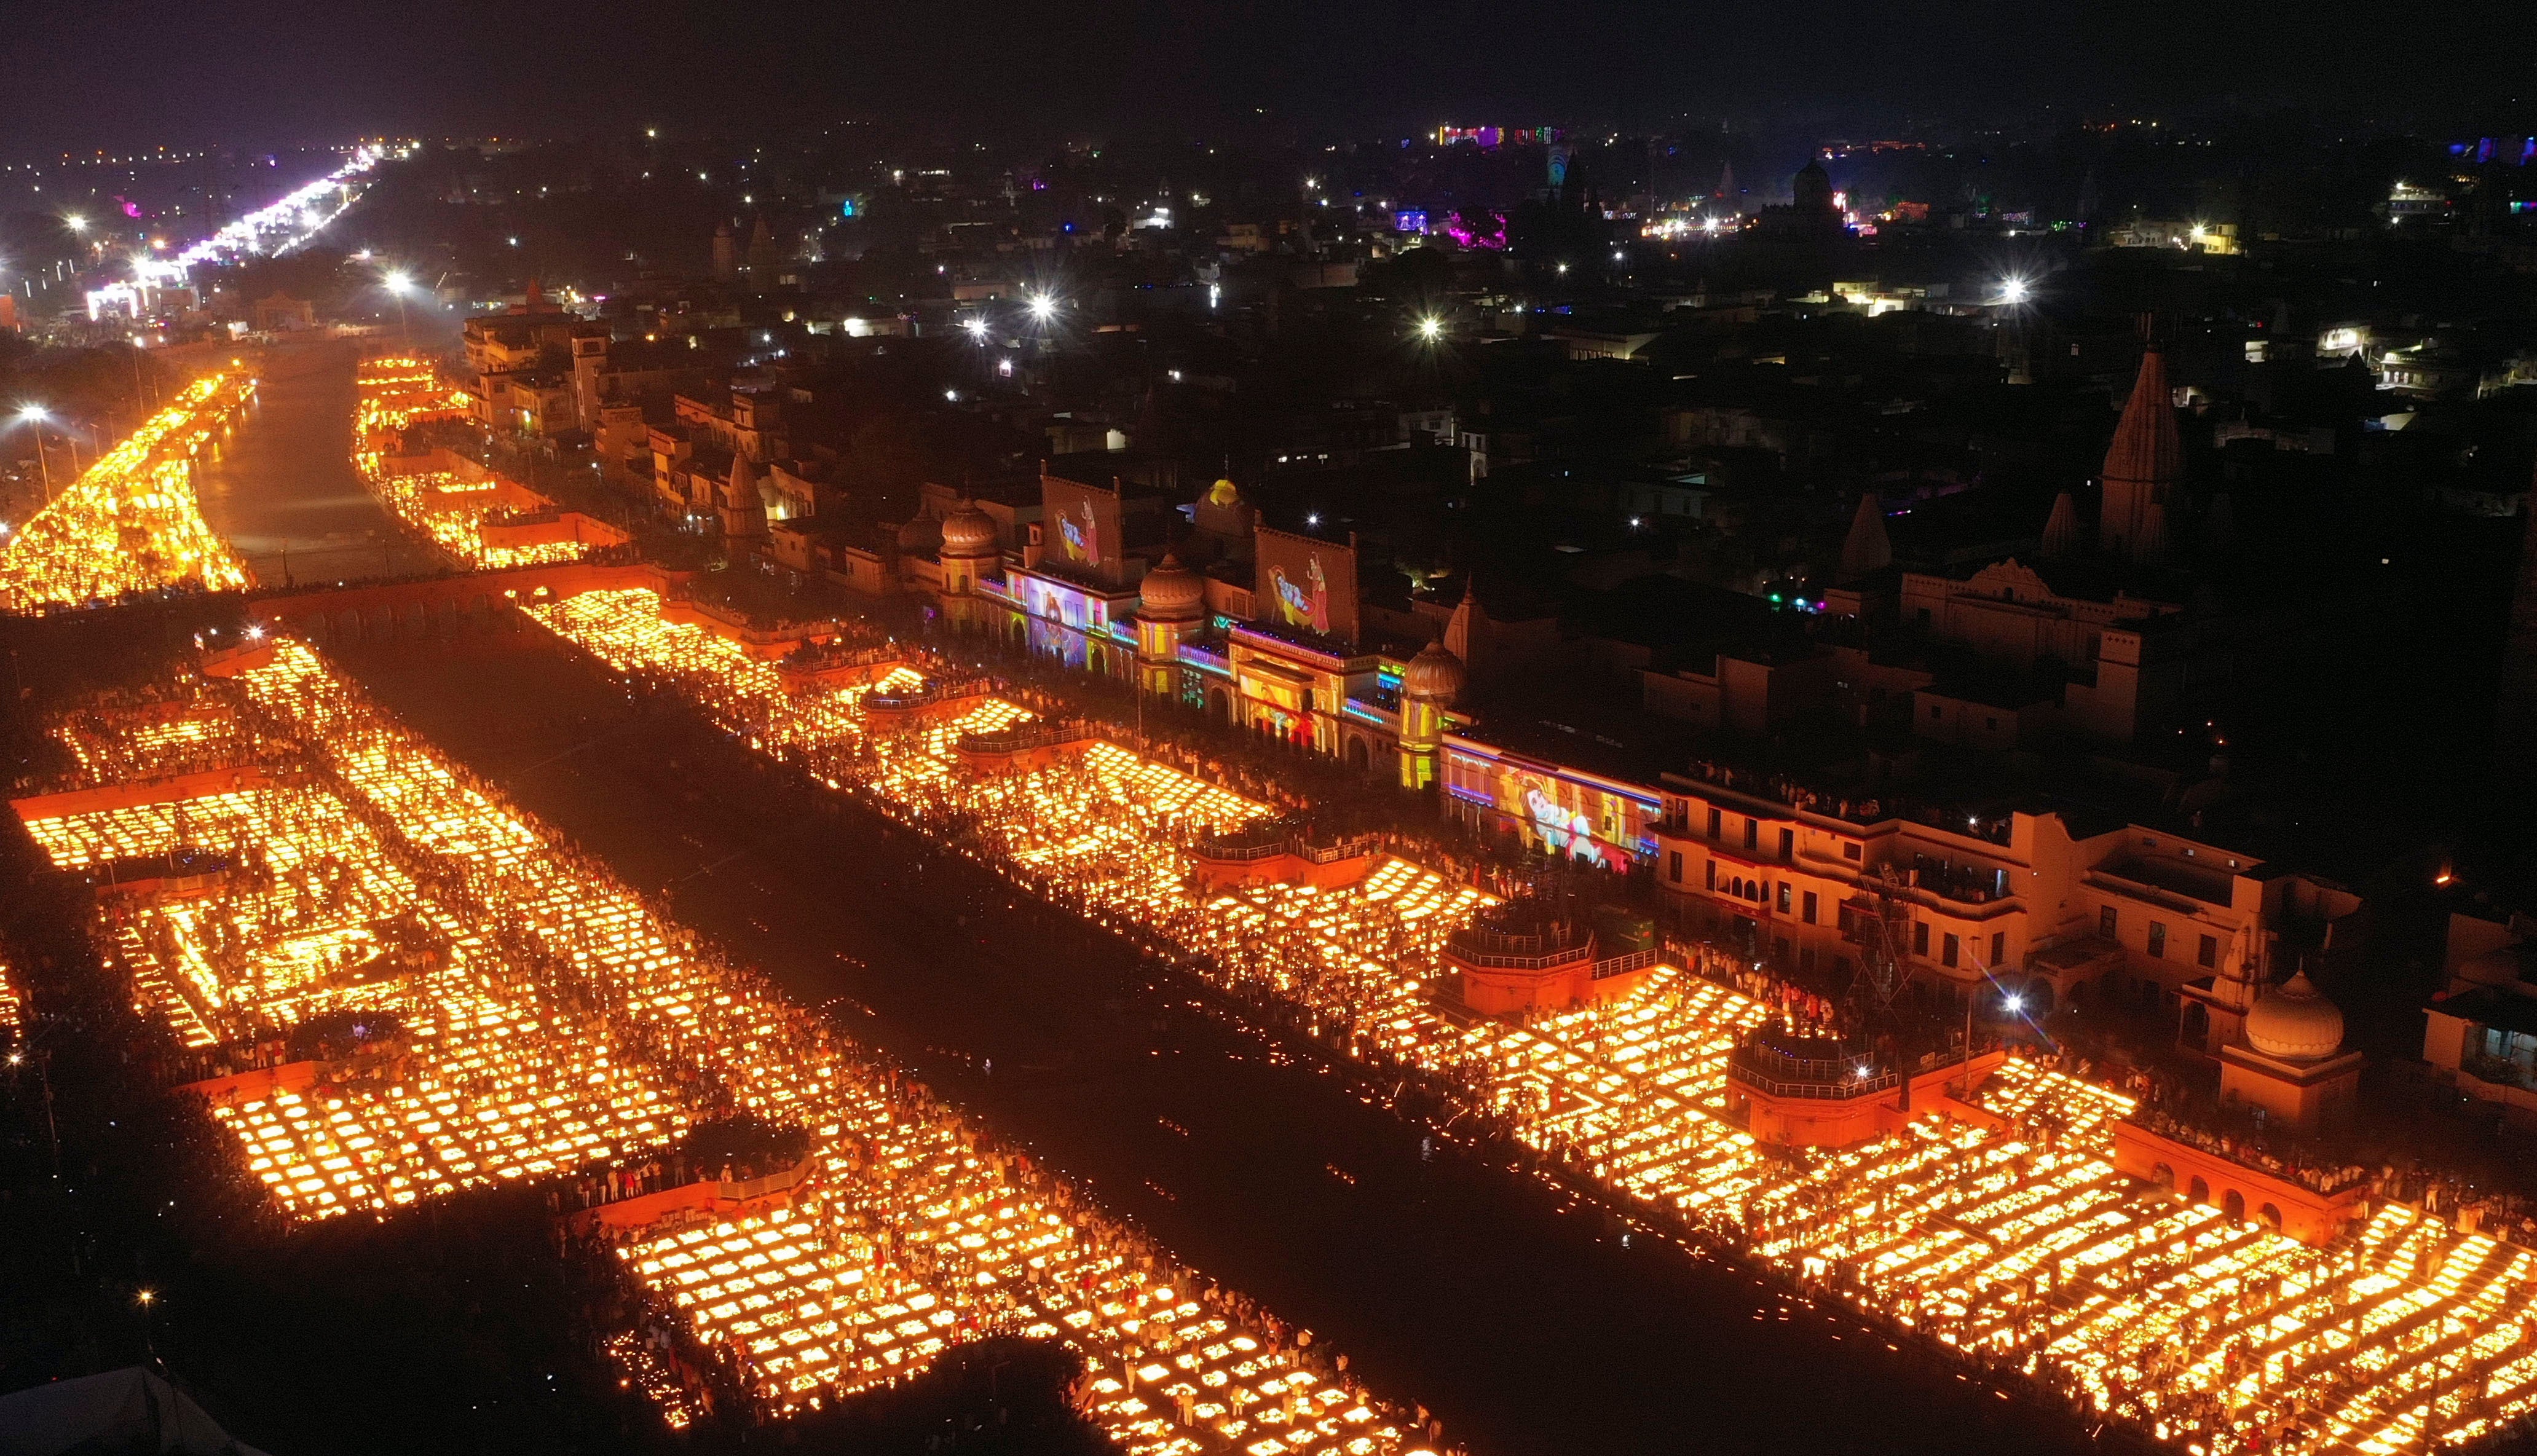 APTOPIX India Hindu Festival